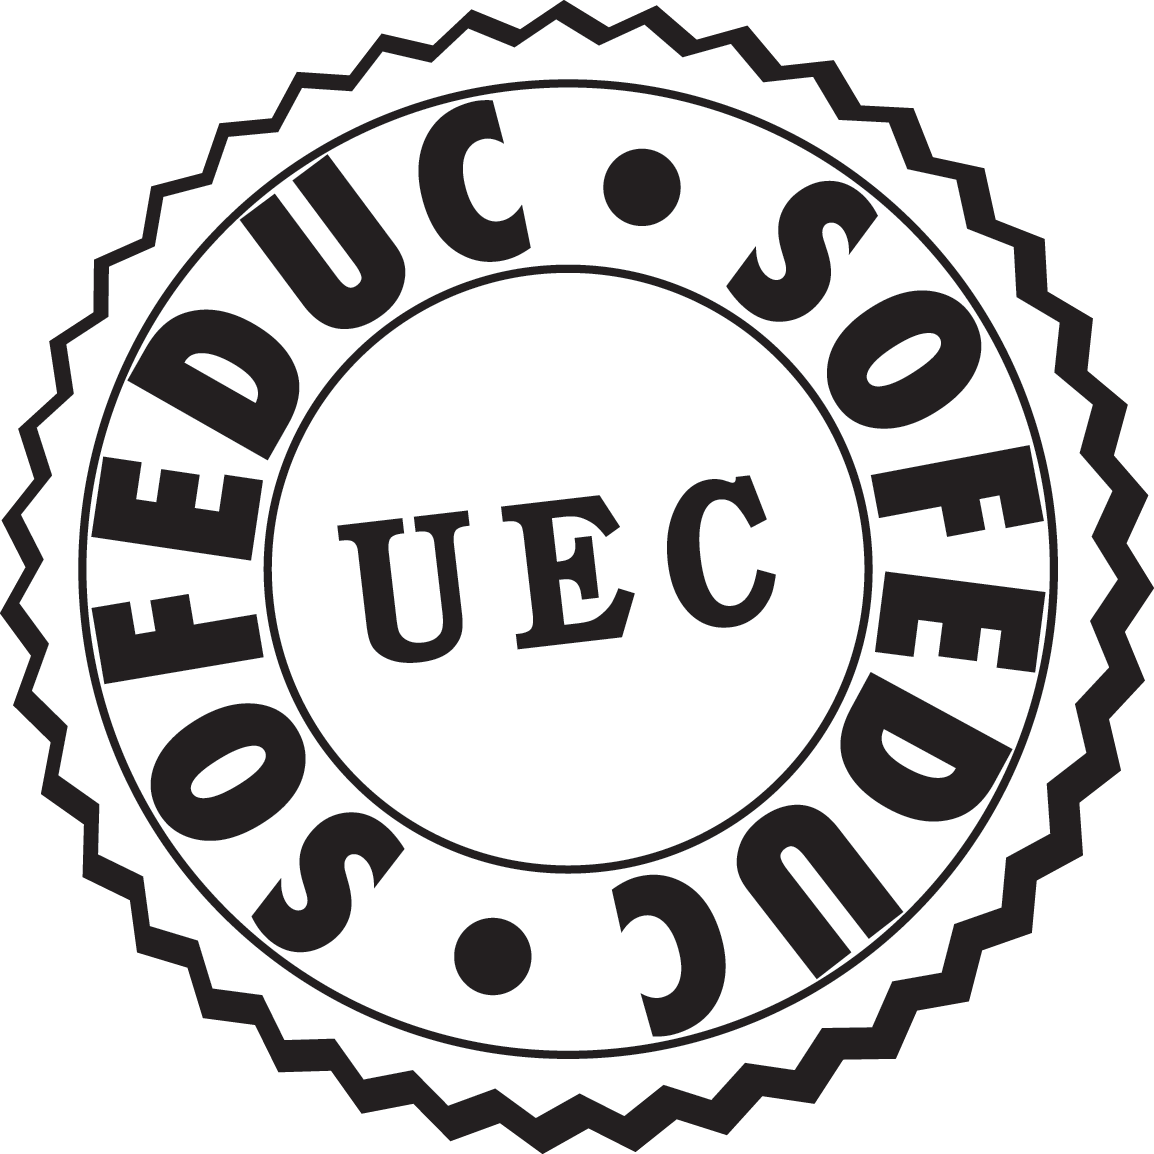 SOFEDUC certification